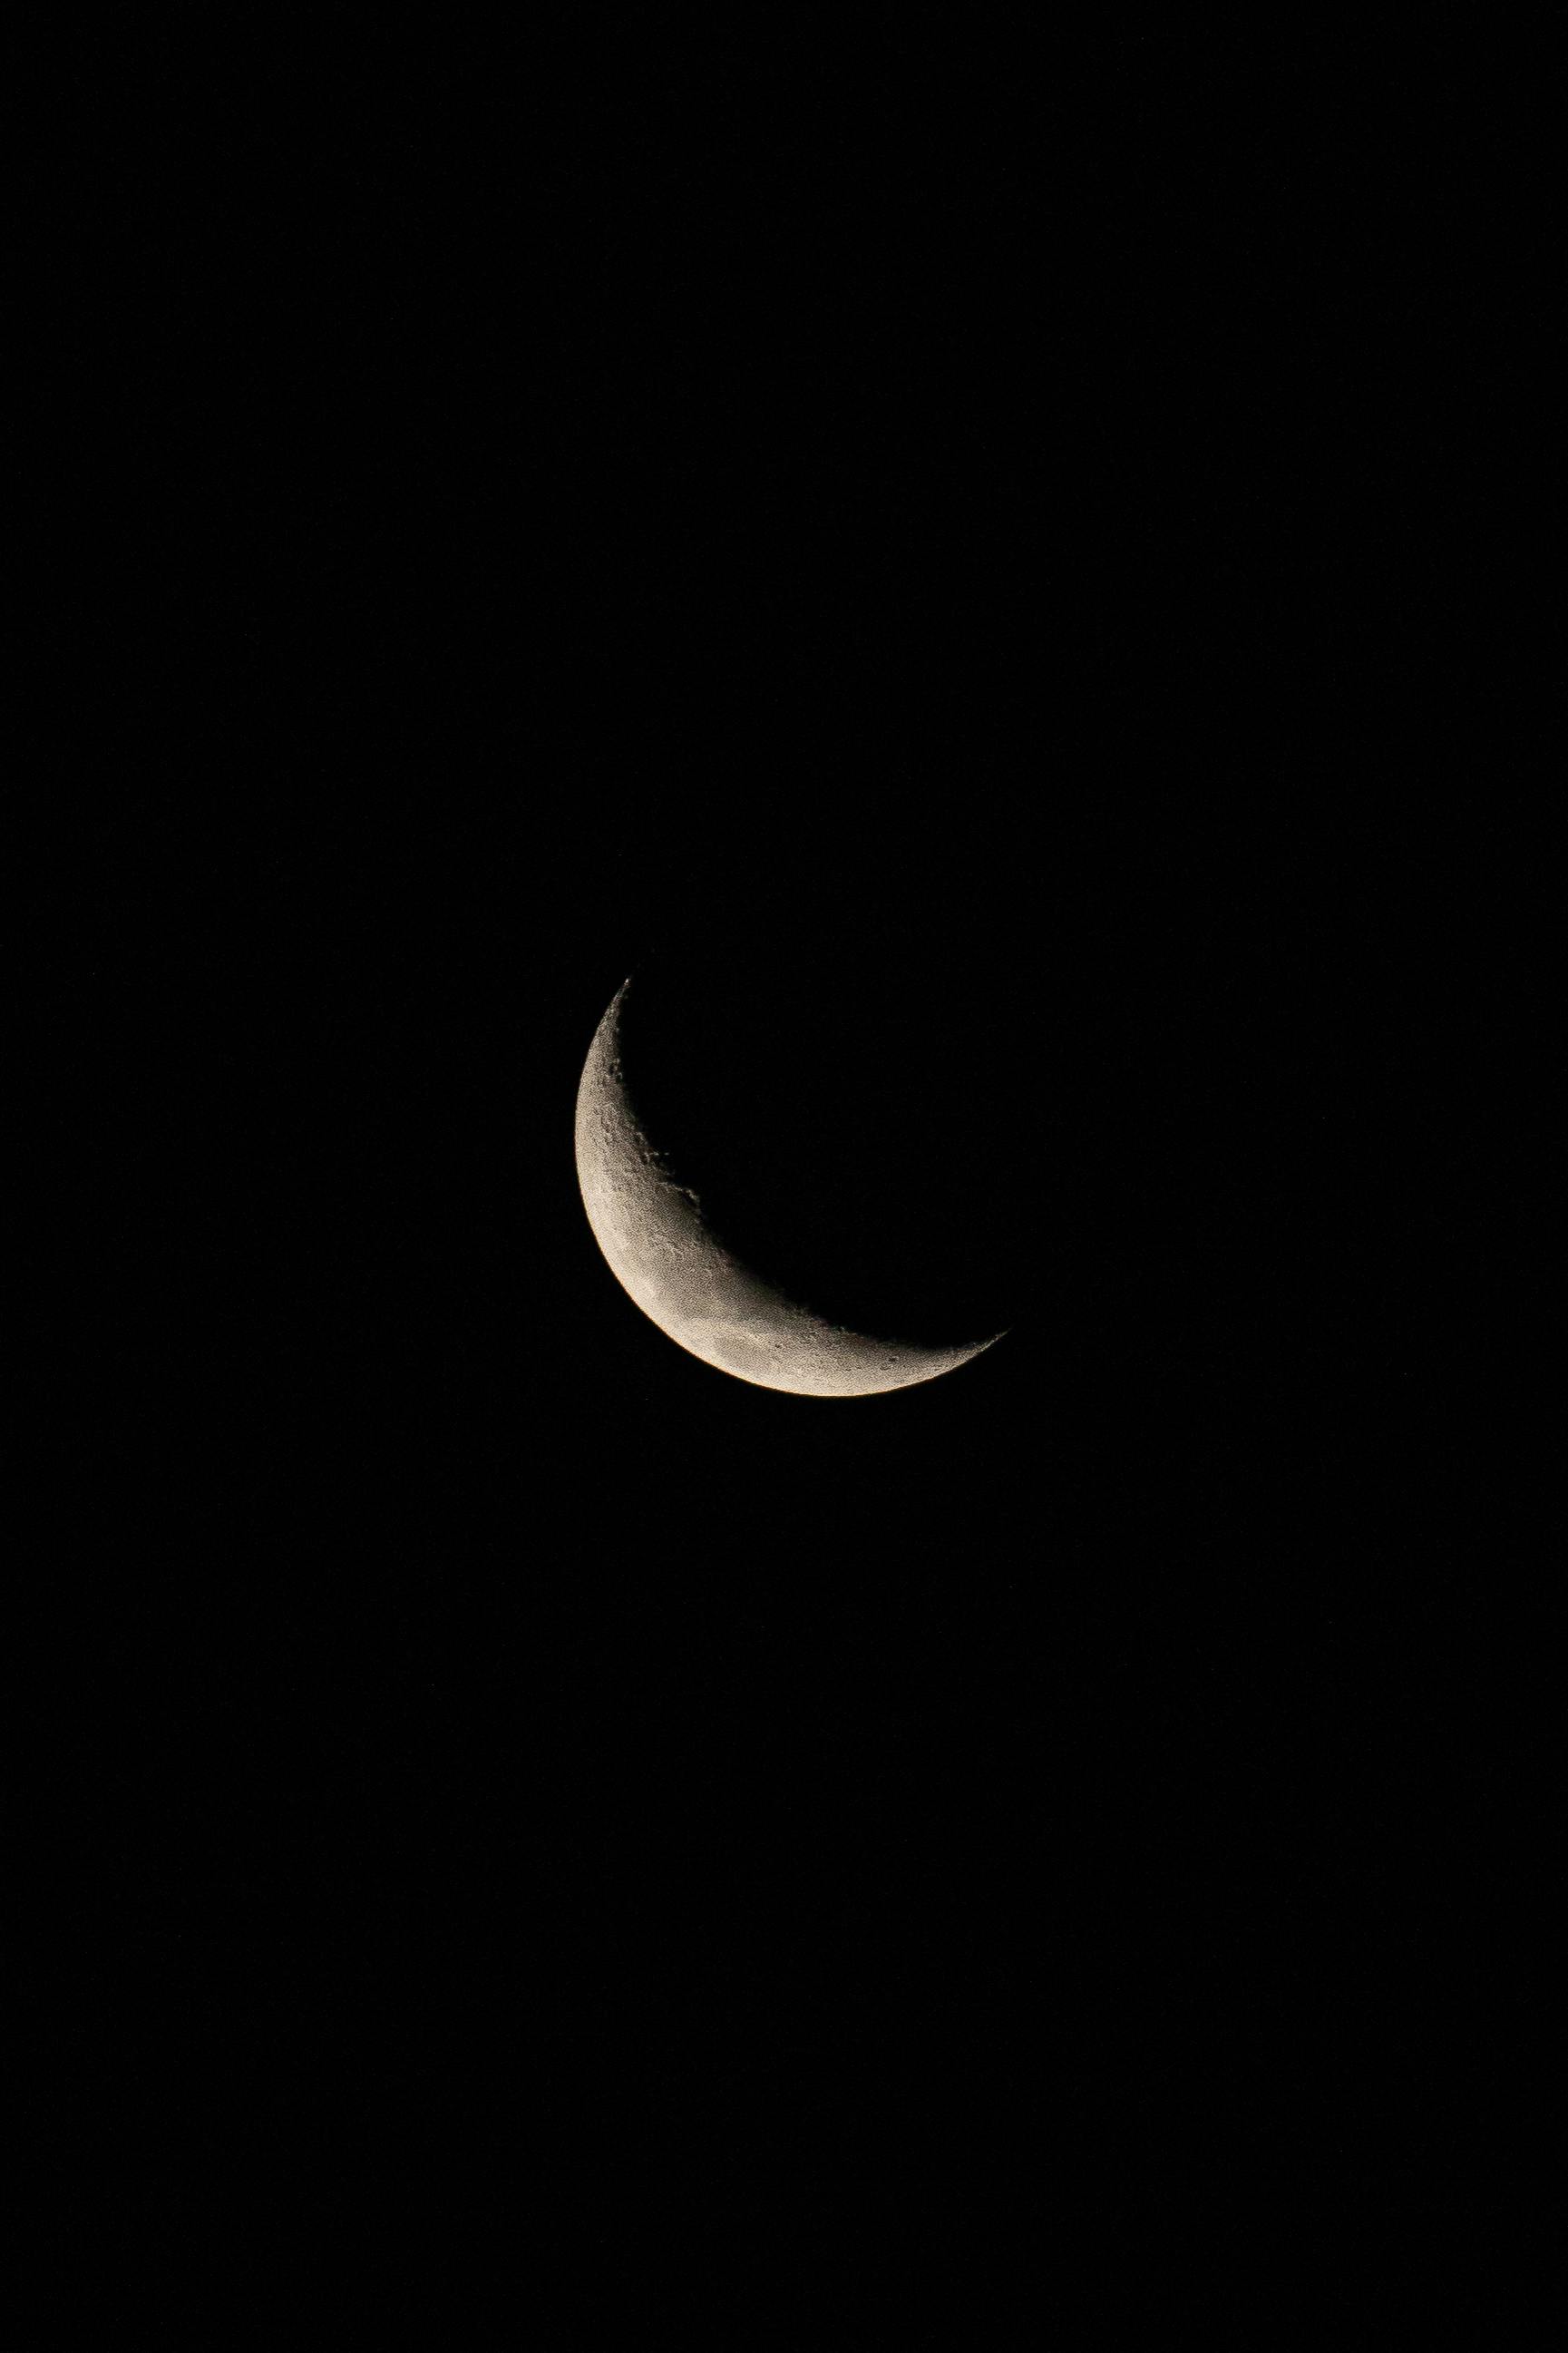 Crescent Moon on Black Background · Free Stock Photo